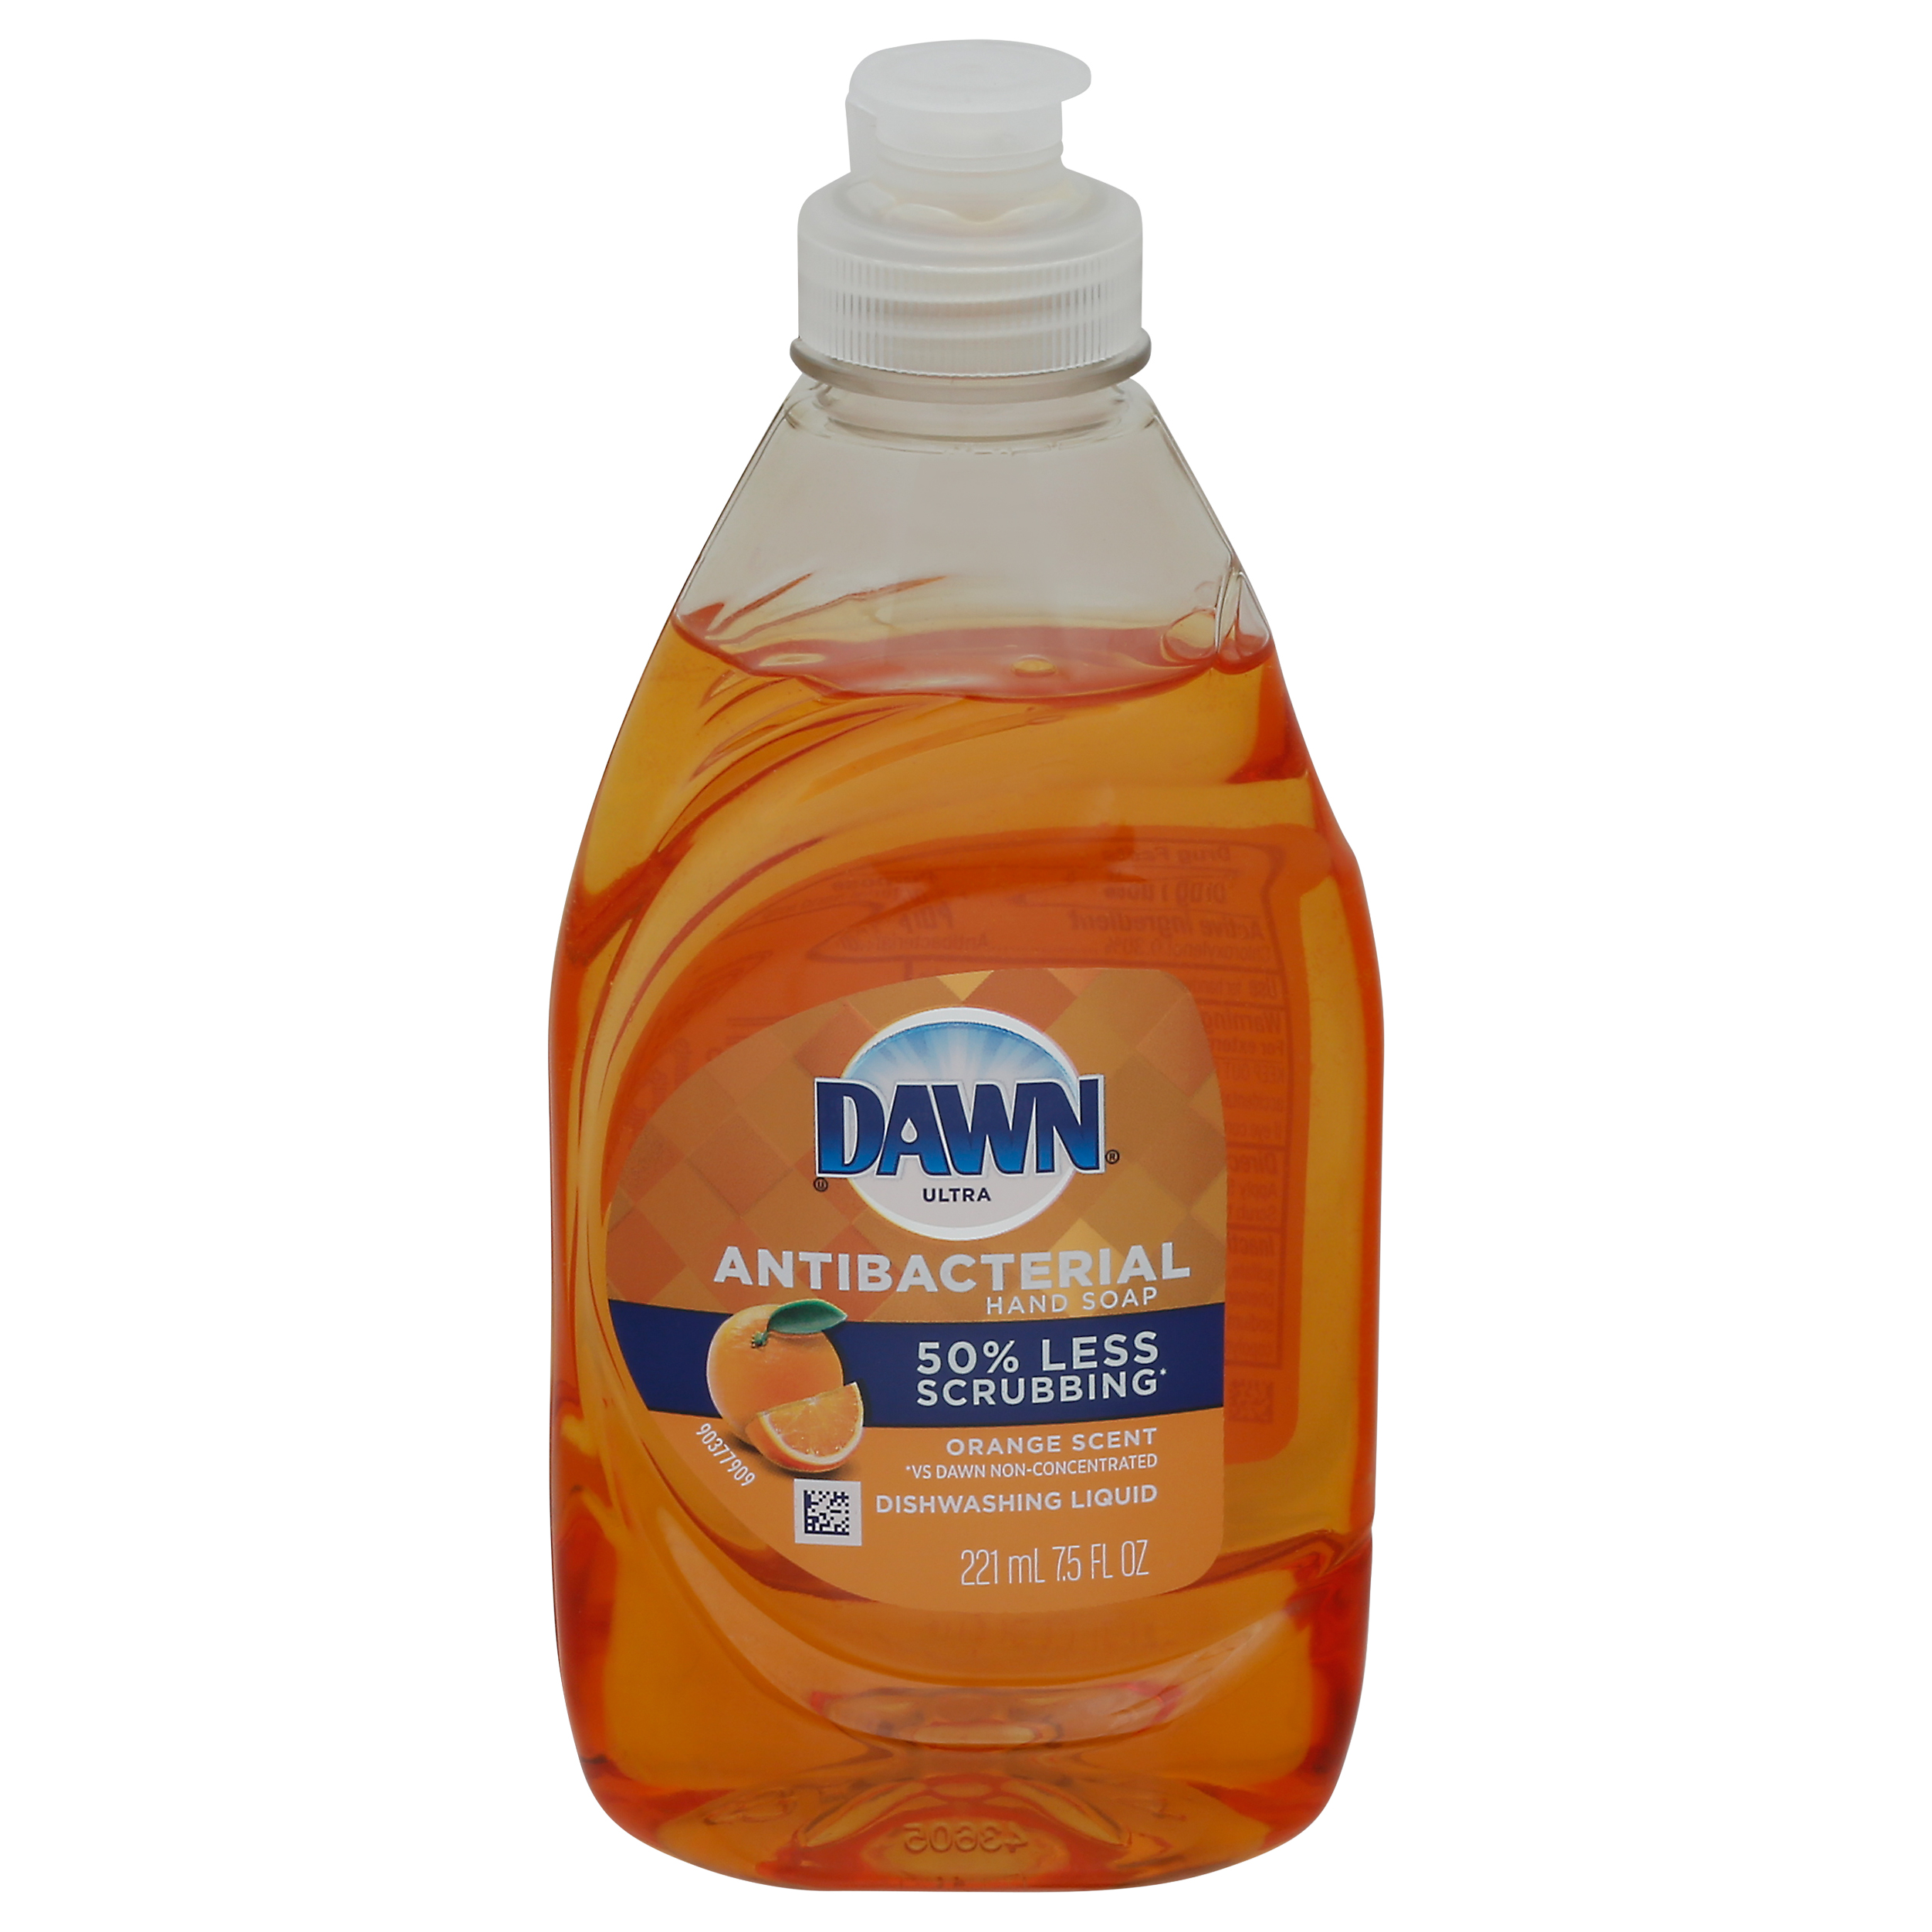 Dawn Ultra Antibacterial Hand Soap Orange Scent Dishwashing Liquid 7.5 fl oz